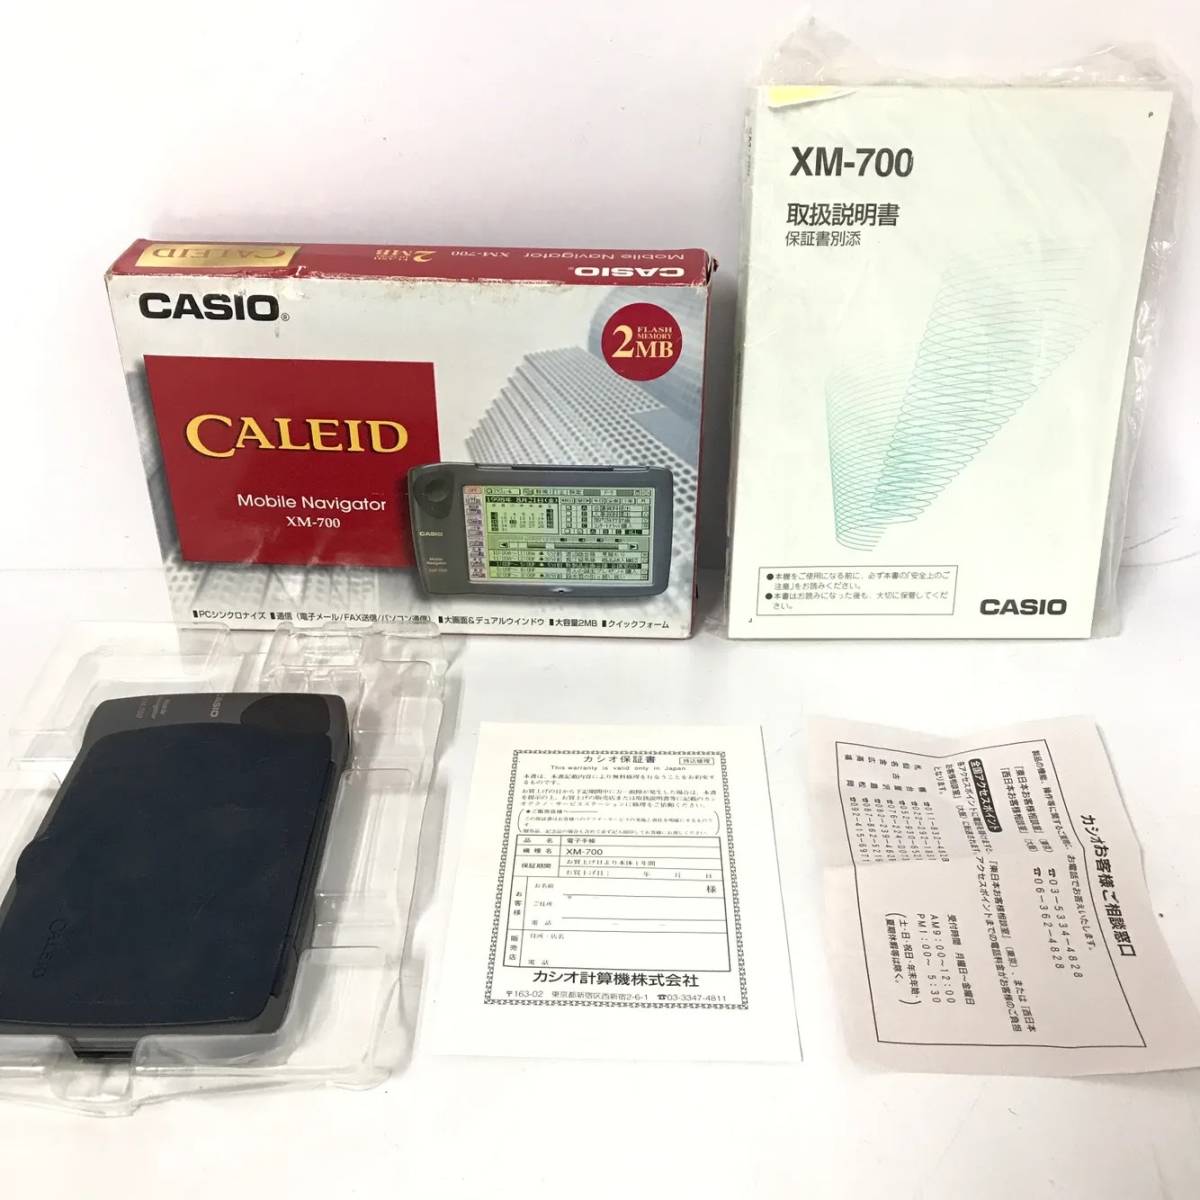 KF1/76　CASIO カシオ CALEID XM-700 Mobile Navigator 電子手帳 モバイルナビゲーター ジャンク品_画像2